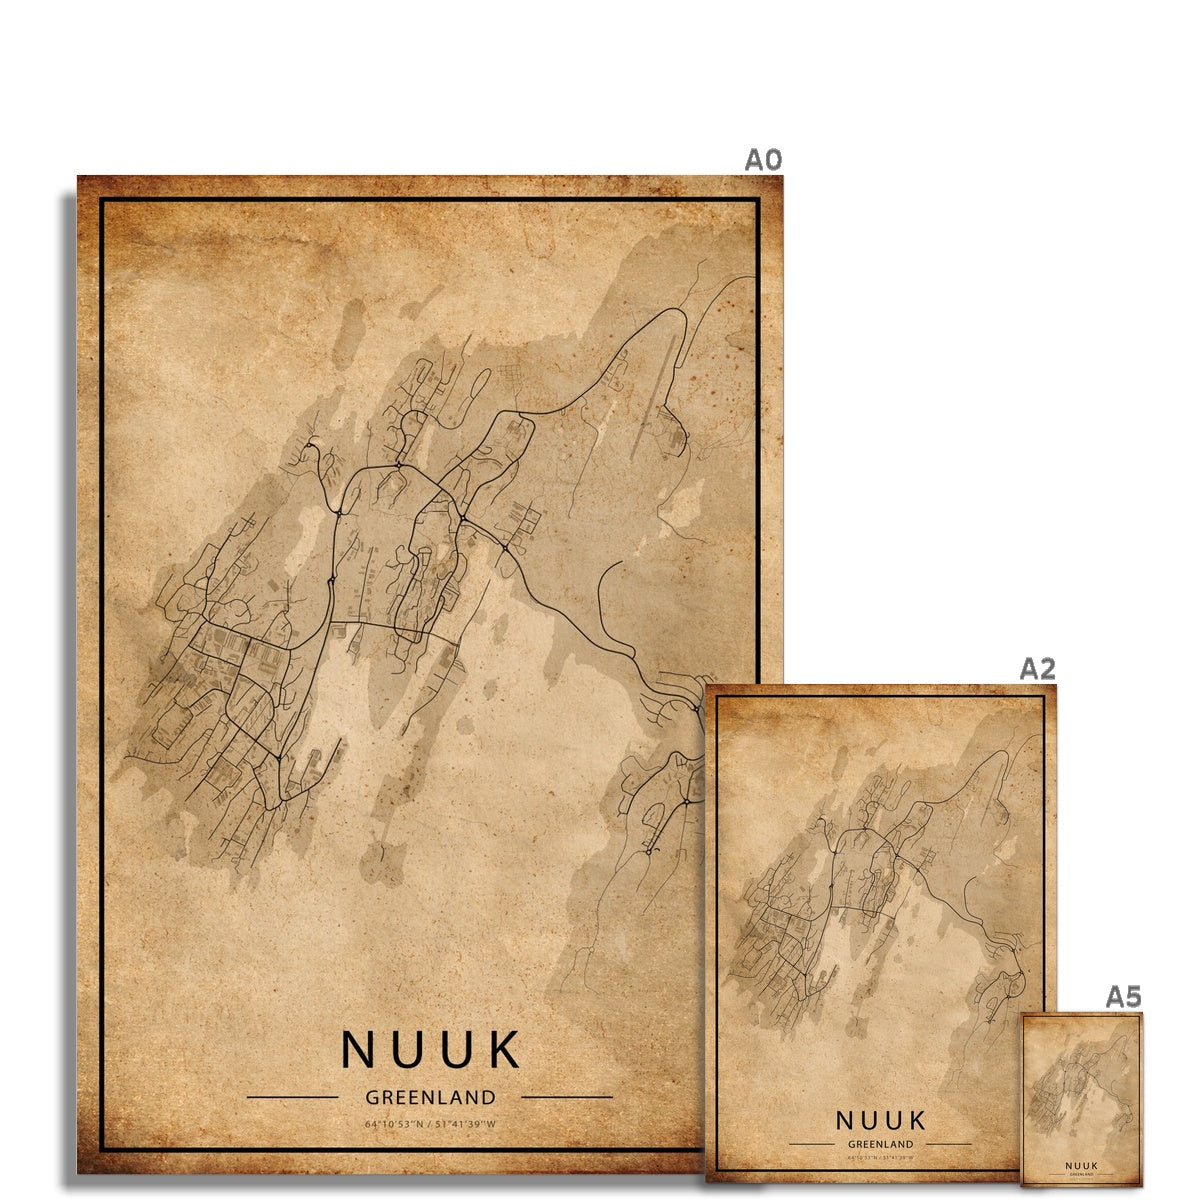 Nuuk Map Poster - Inu-Art